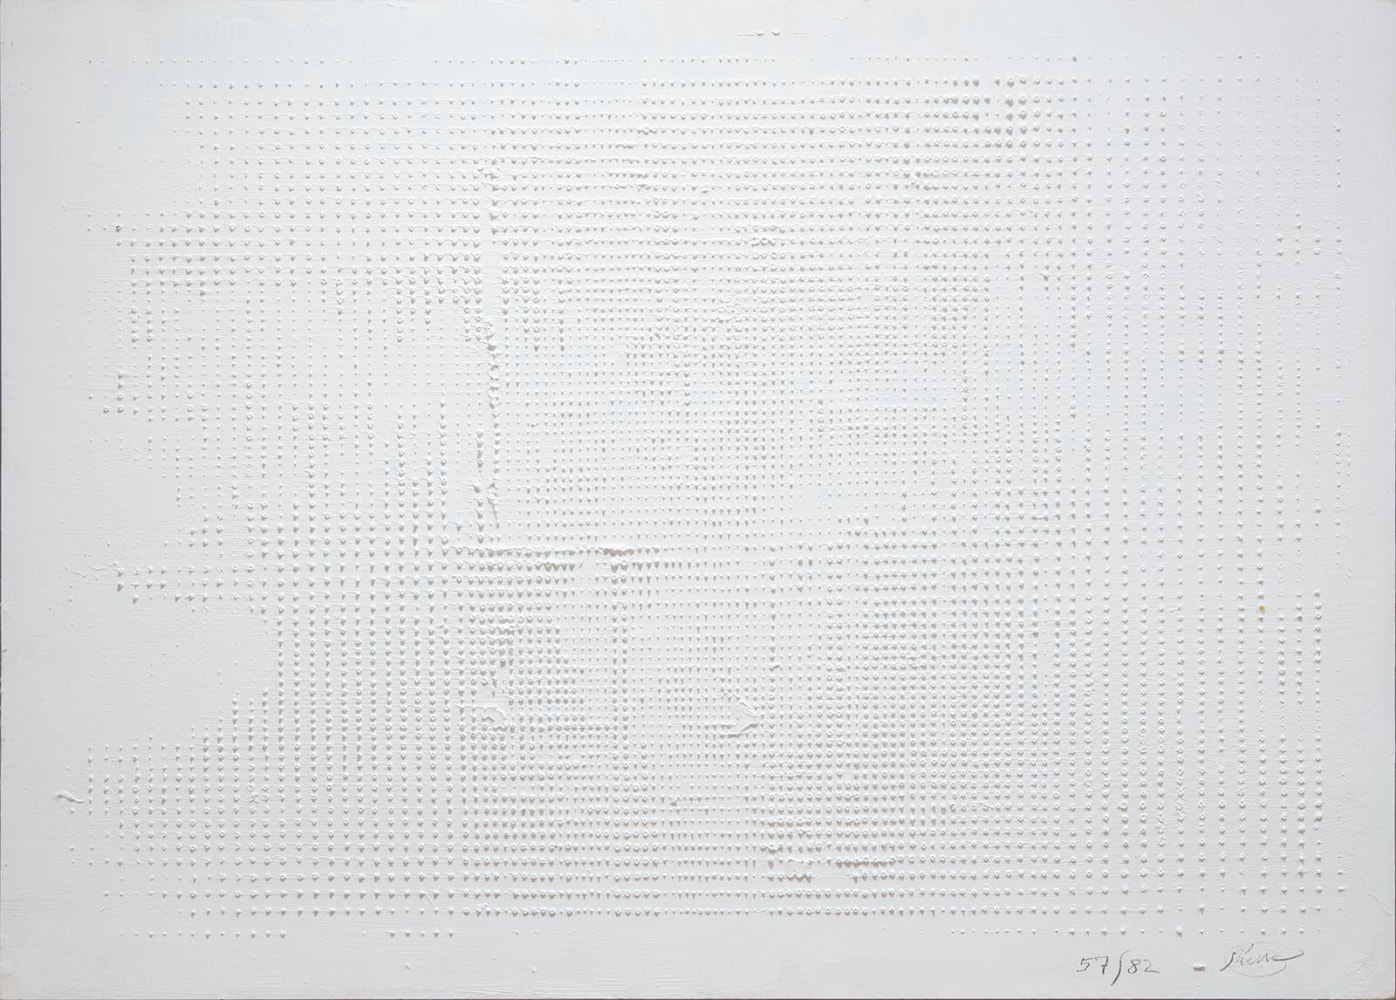 Otto Piene
Untitled (Rasterbild), 1957/1982
oil on board
28 3/4 x 40 inches (73 x 101,6 cm) 33 x 44 1/2 inches (84 x 113 cm) frame
SW 15374
Private Collection